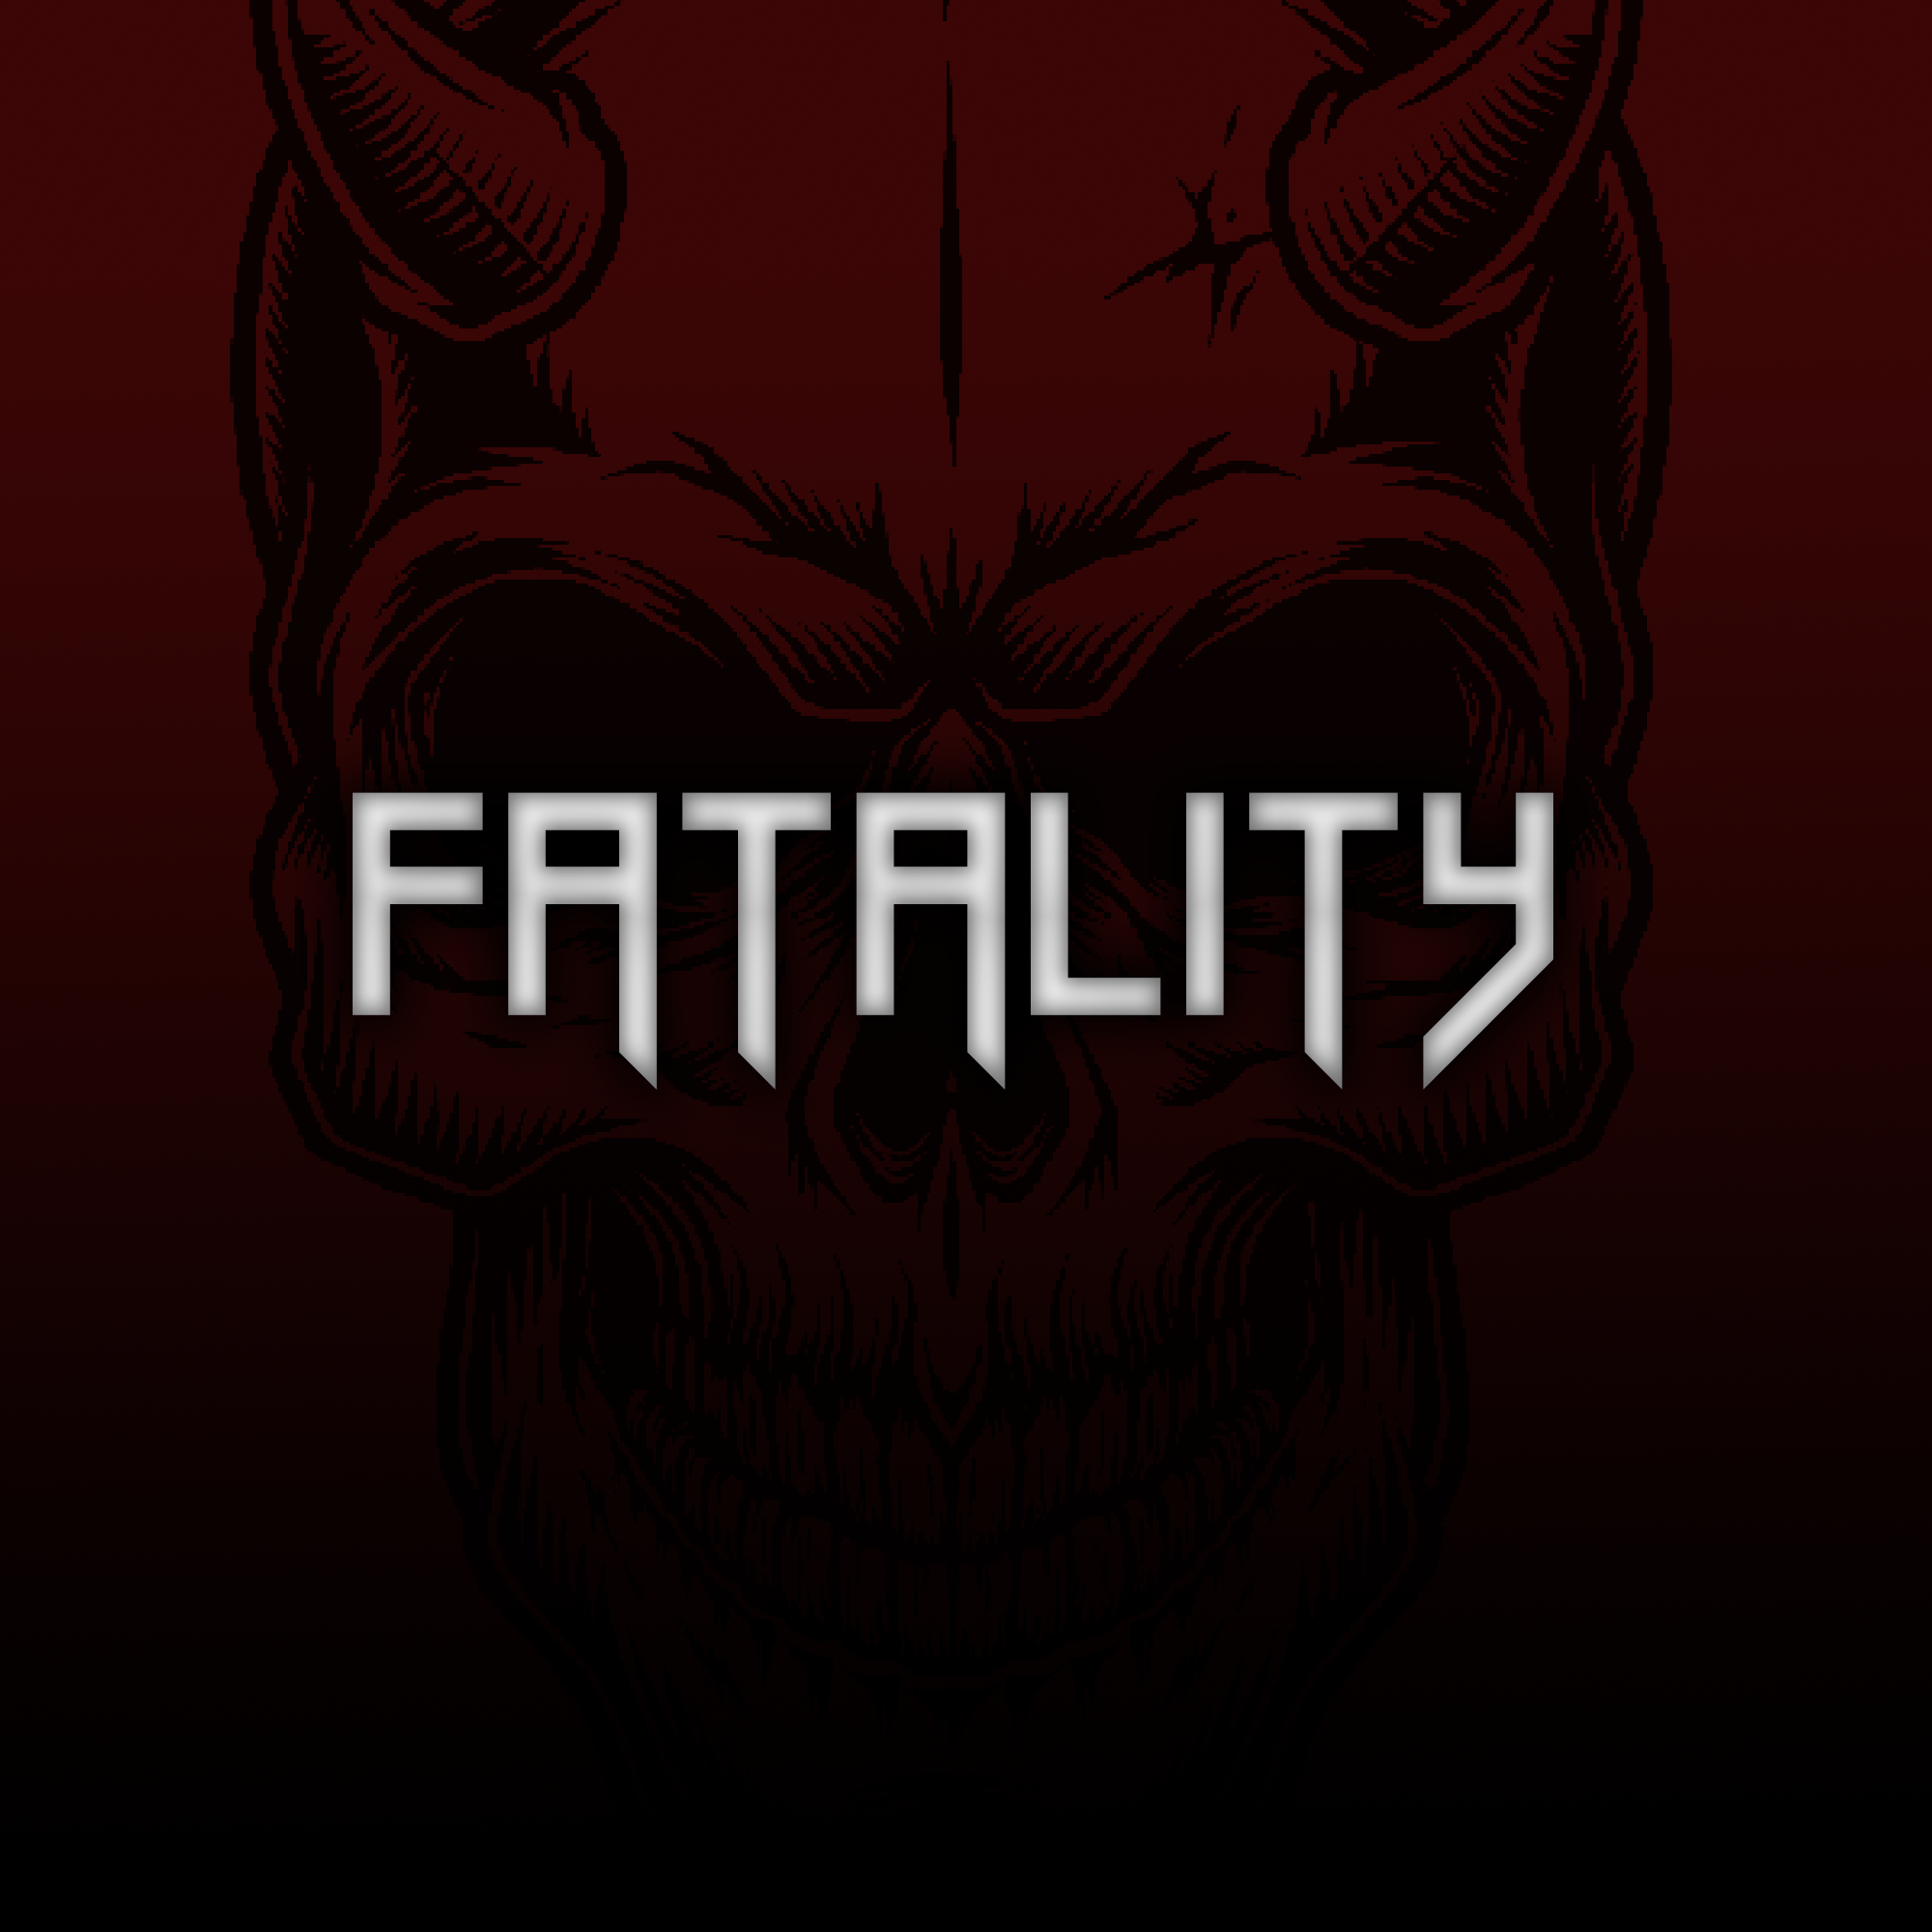 Fatality team logo